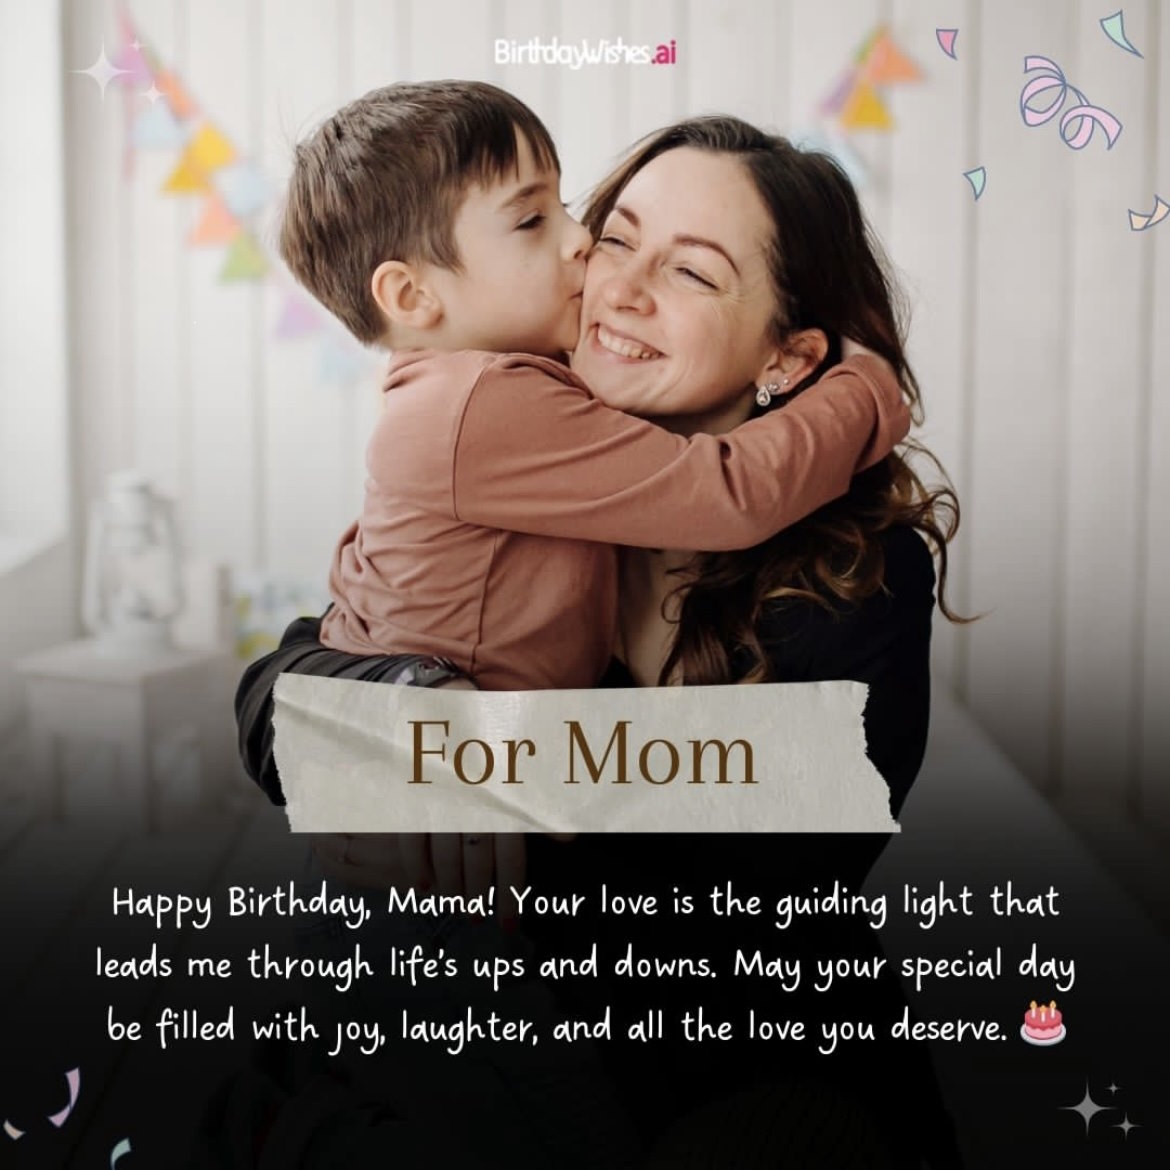 Birthday Wishes for Mom - mom hugging a boy